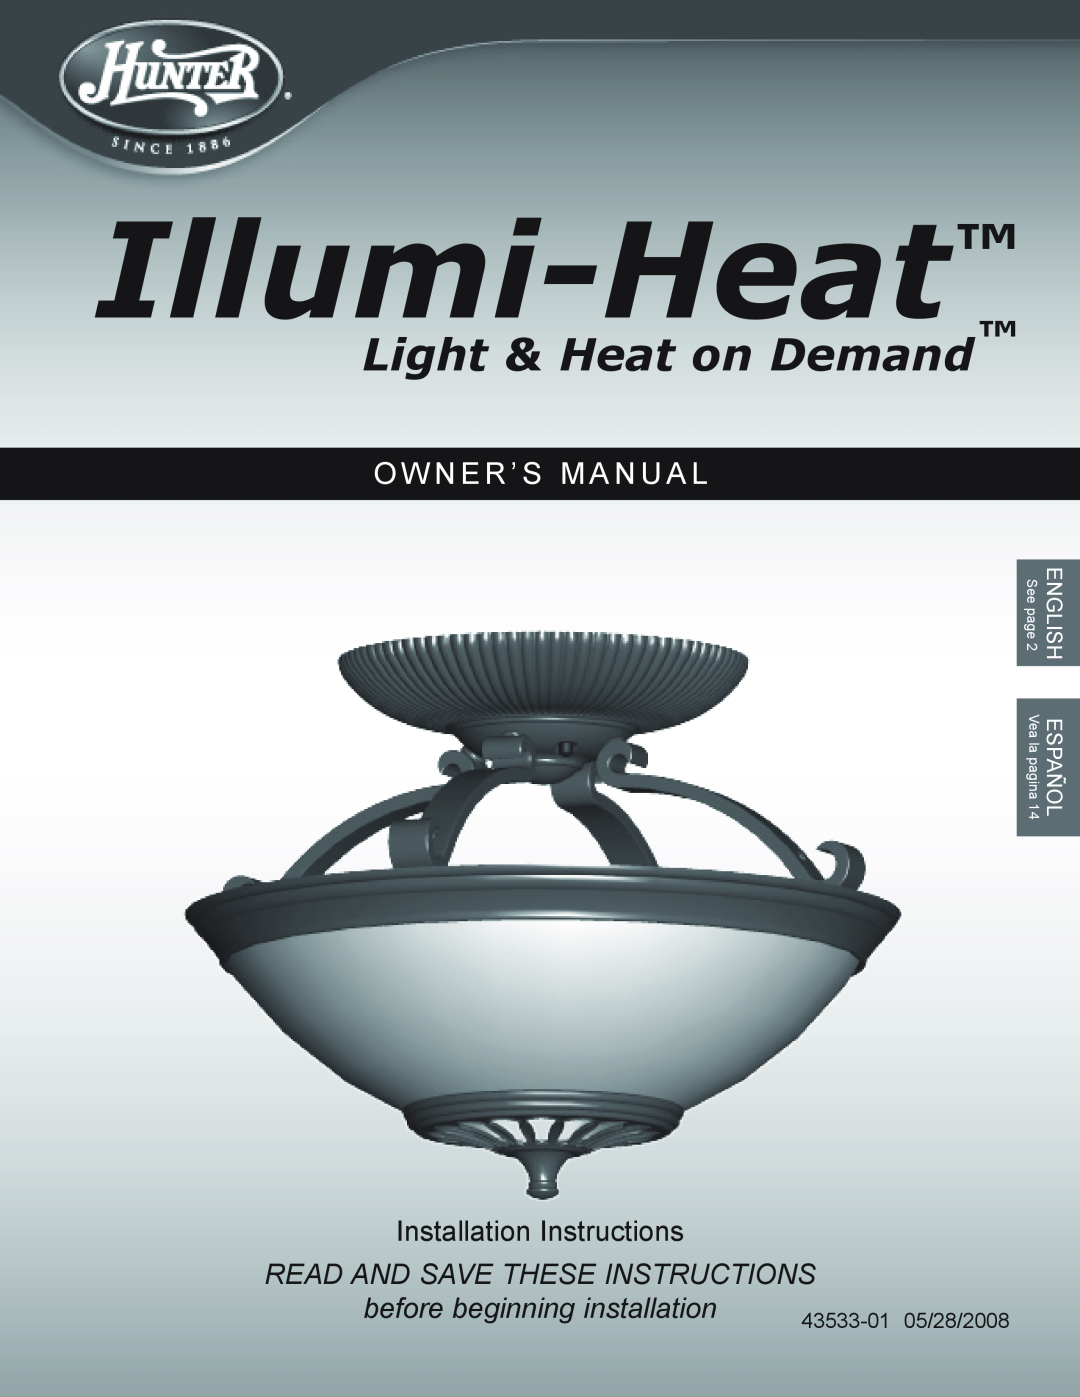 Hunter Fan Illumi-Heat owner manual Light & Heat on Demand, O W N E R ’ S M A N U A L, Installation Instructions, English 